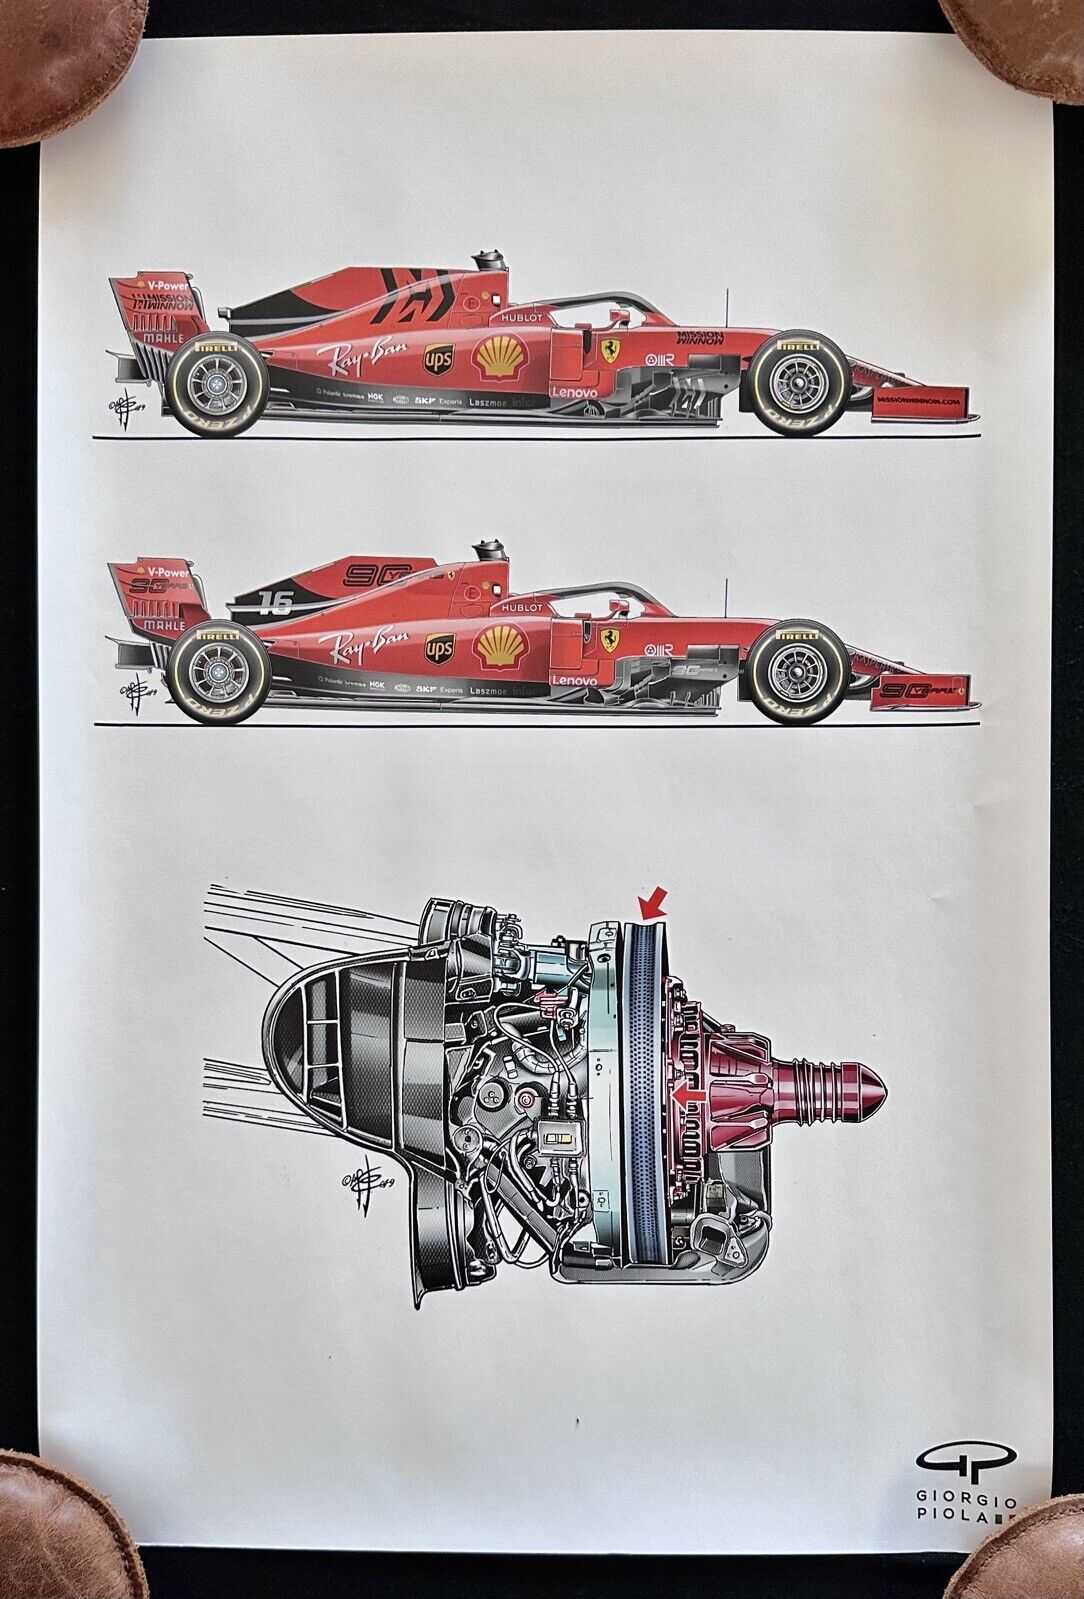 Giorgio Piola 2019 Ferrari SF90 Print Project 670 Vettel Leclerc Brake Assembly